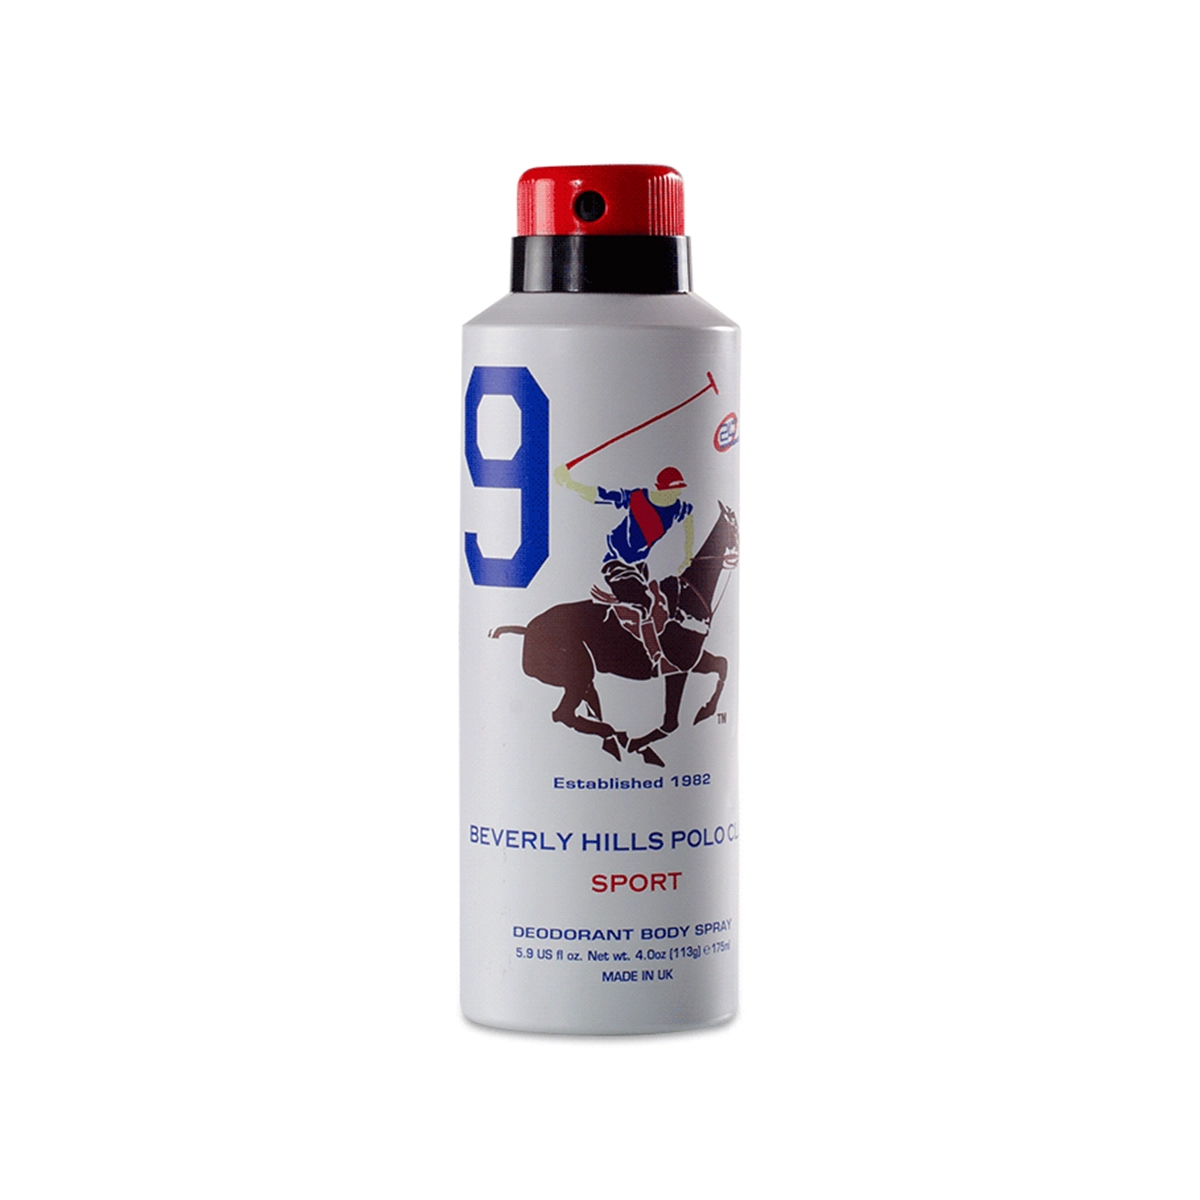 Polo Deodorant Body Spray Men Sport No9 175ml